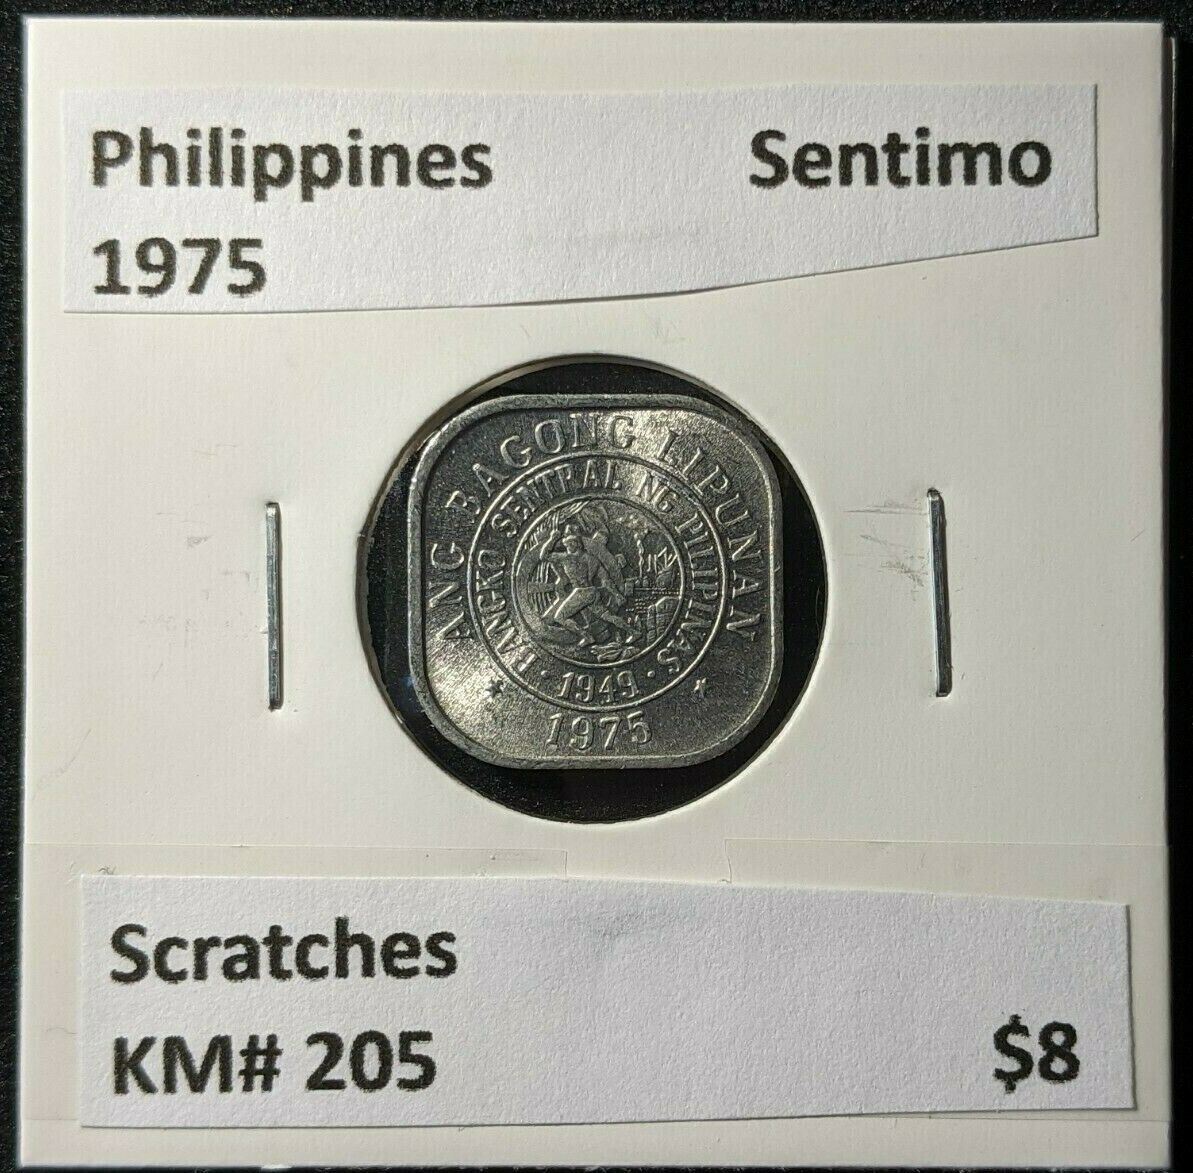 Philippines 1975 Sentimo KM# 205 Scratches #1857